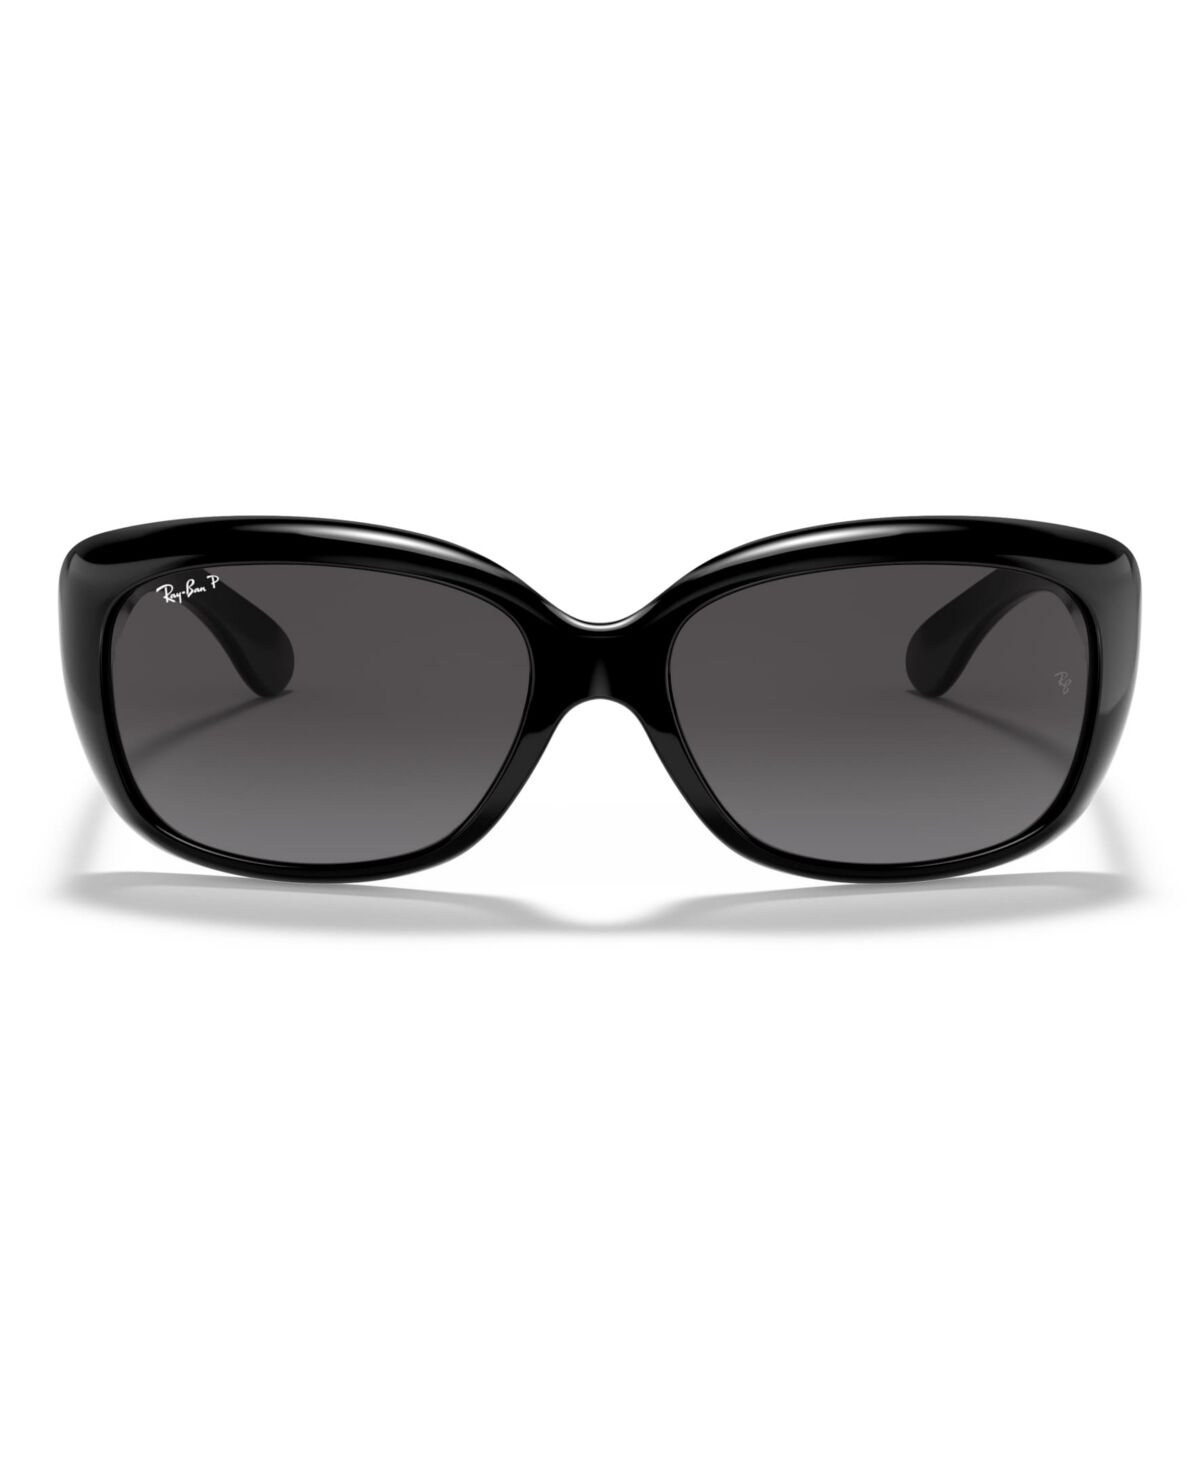 Ray-Ban Women's Polarized Sunglasses, RB4101 Jackie Ohh - BLACK/GREY GRAD POLAR